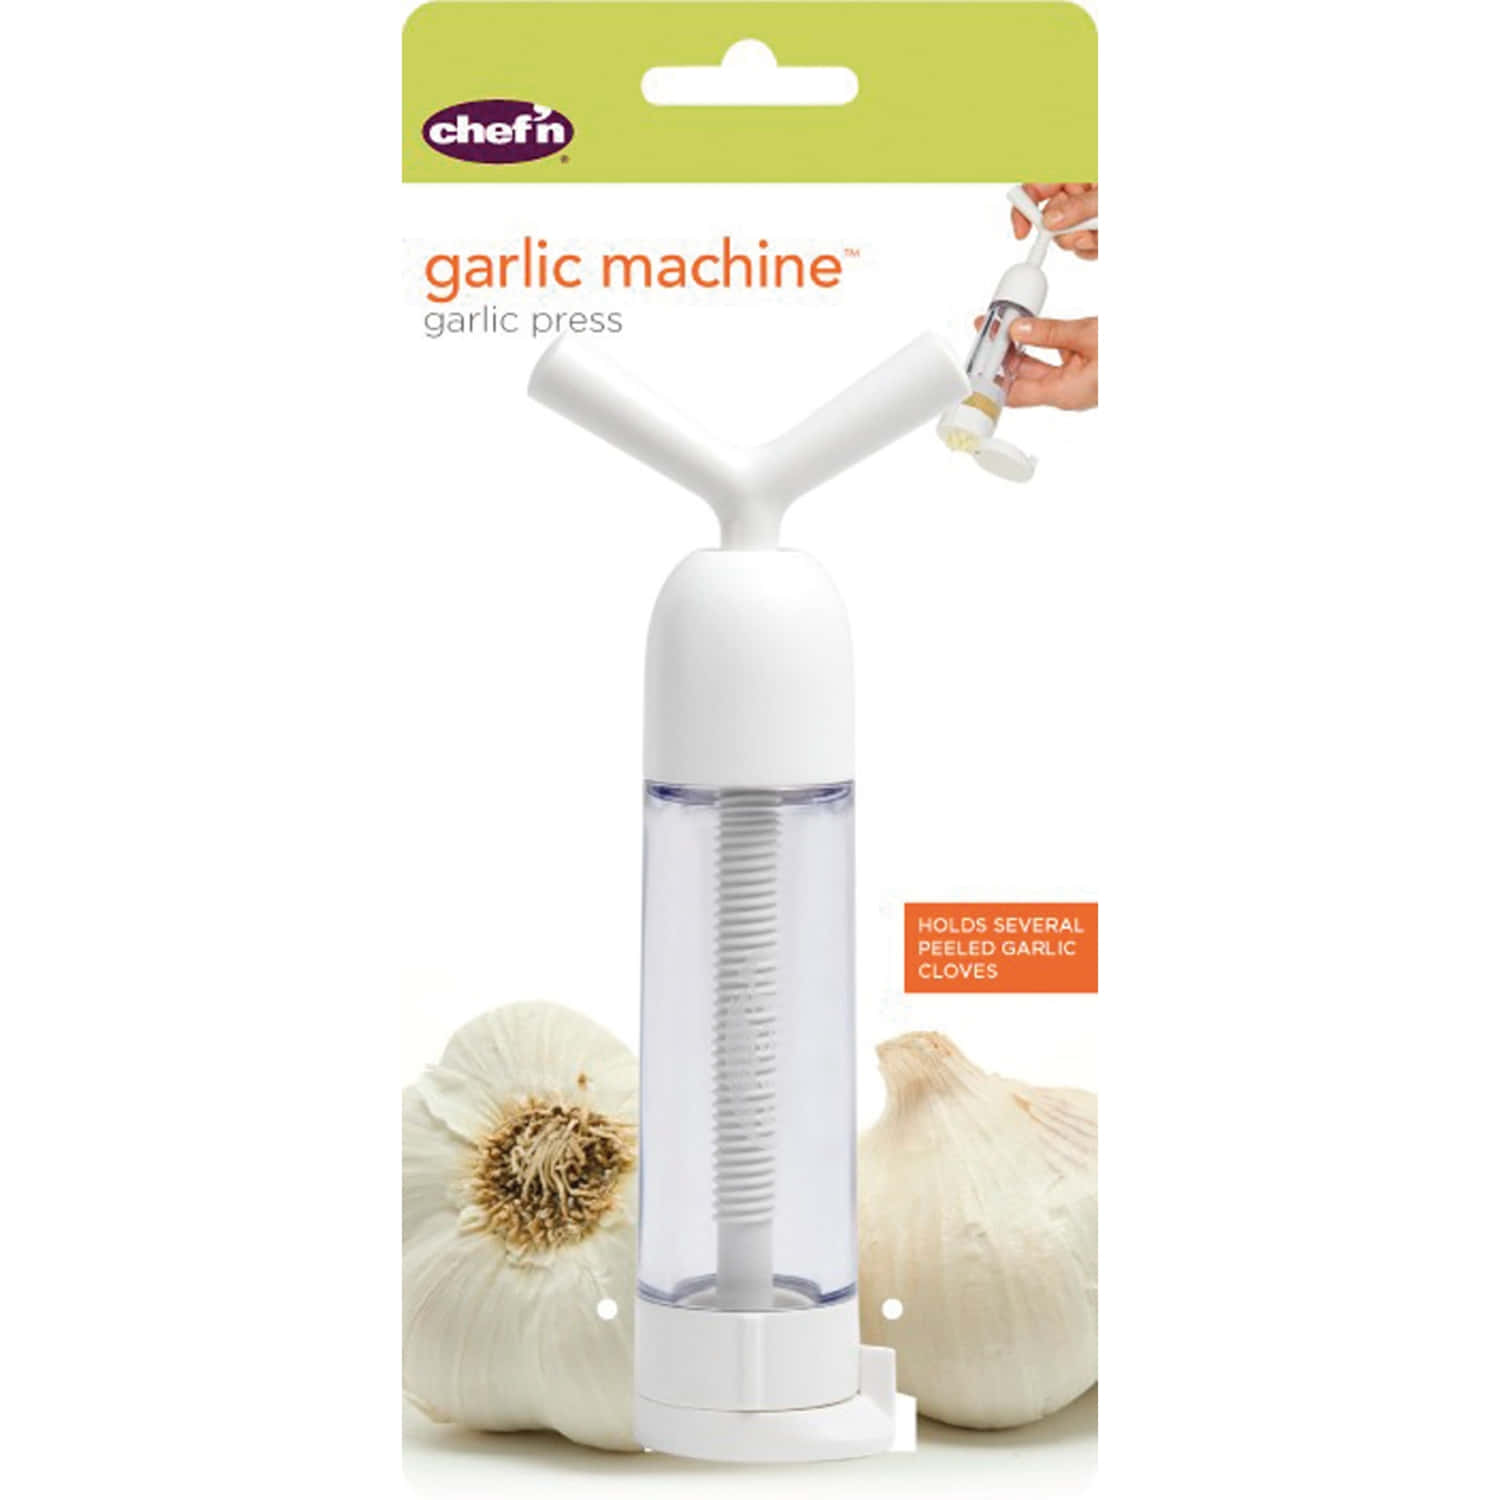 Chef'n GarlicMachine Garlic Press